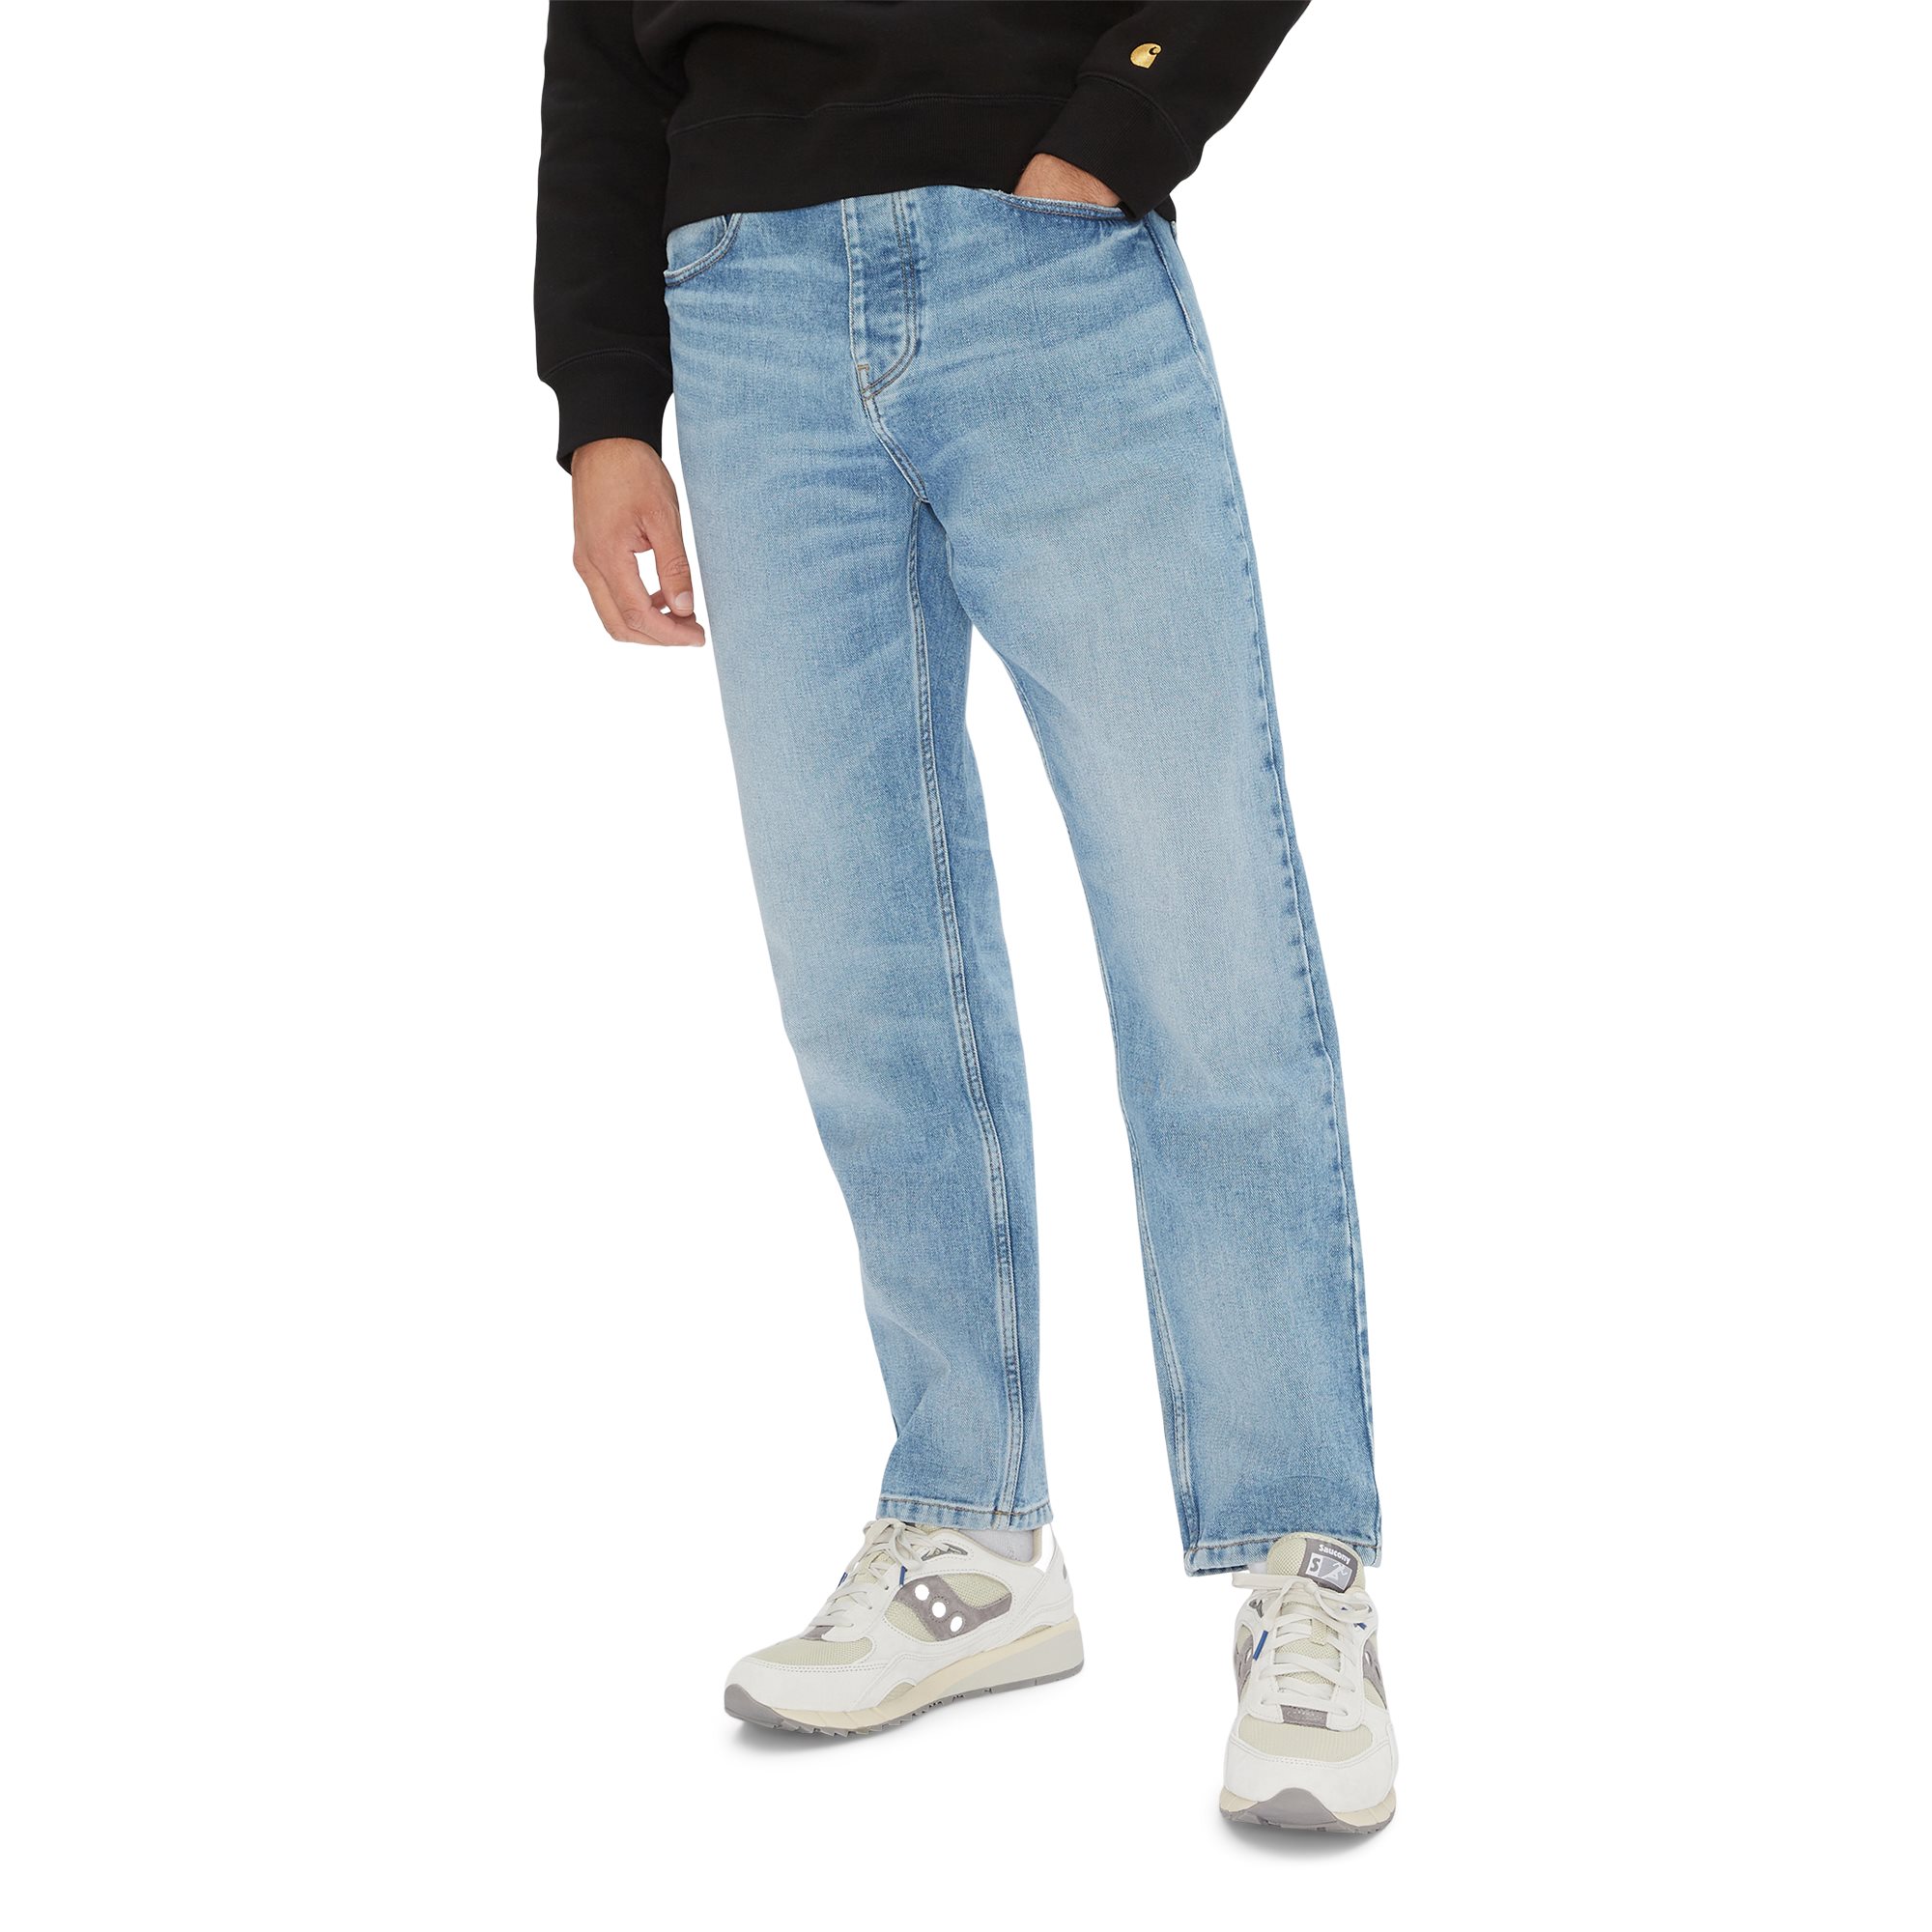 Newel Jeans - Jeans - Tapered fit - Denim